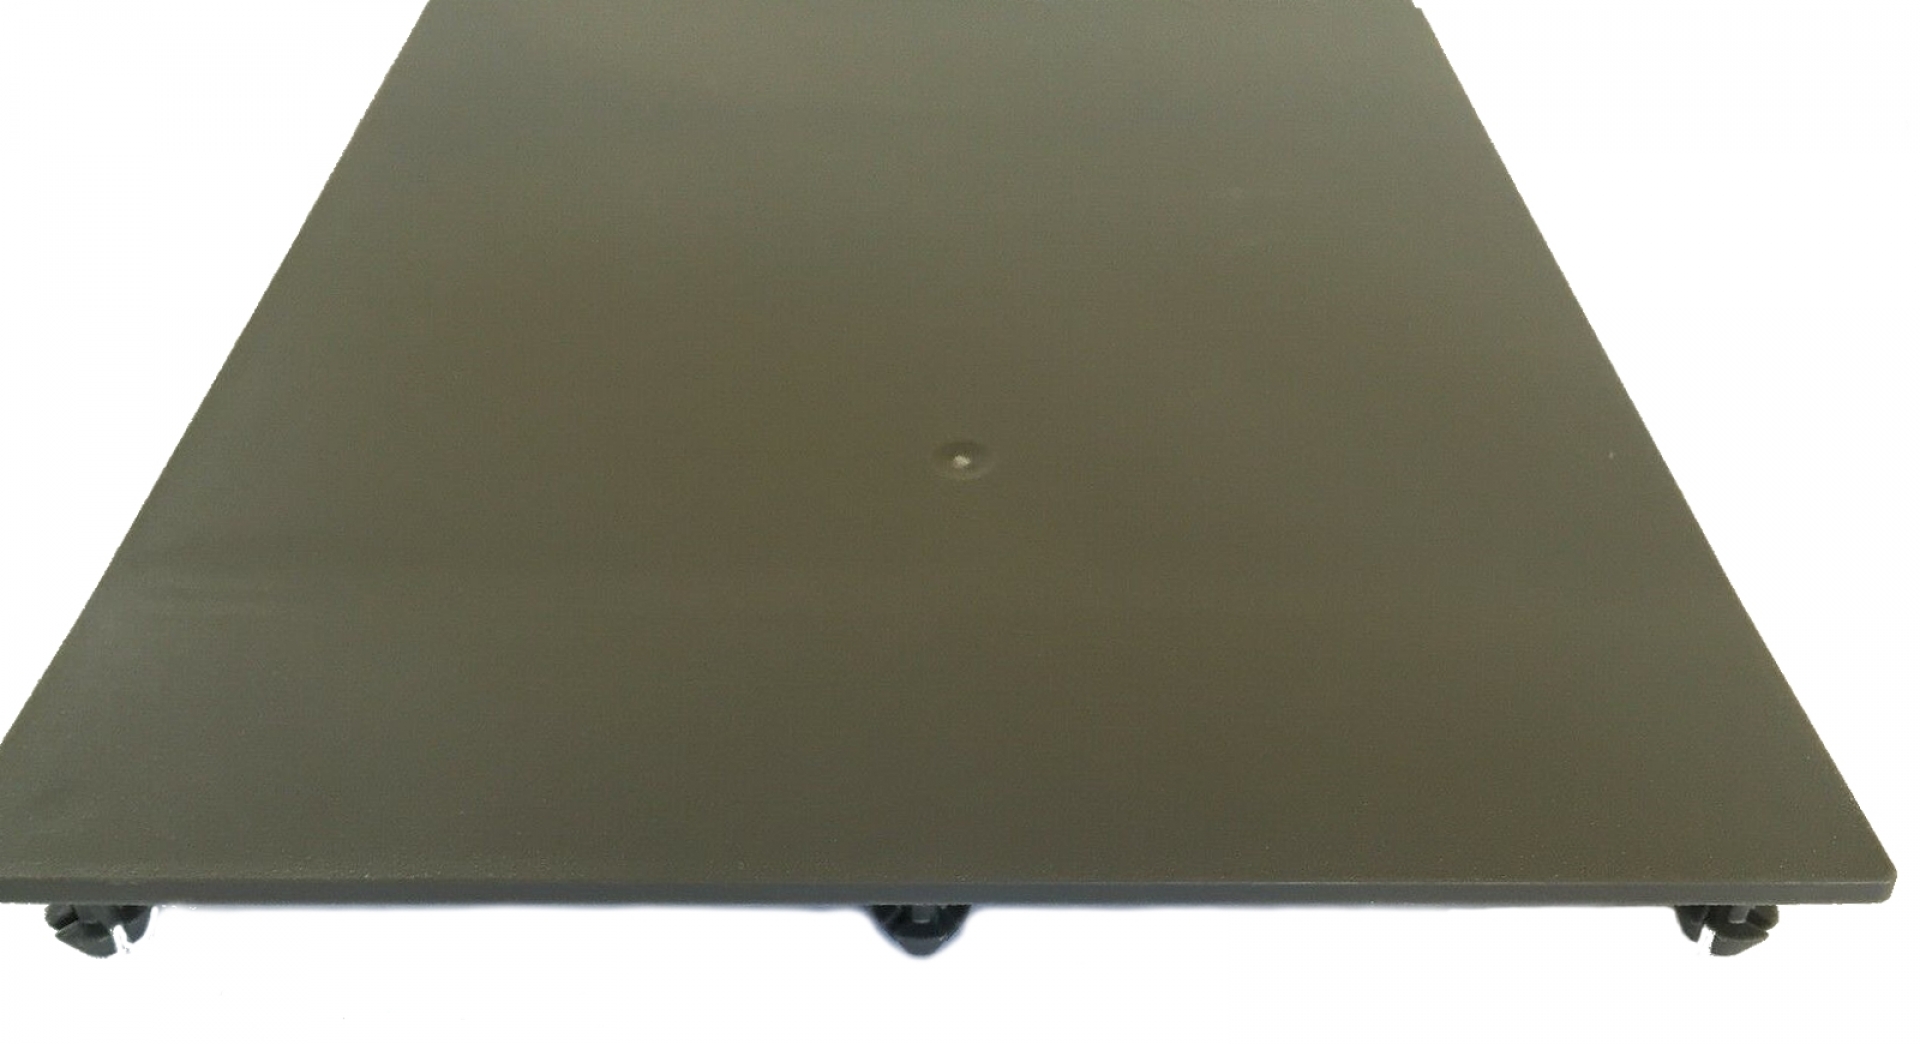 MEAFloor *B-WARE* Gitterrostauflage Oberfläche glatt 800x200mm grau